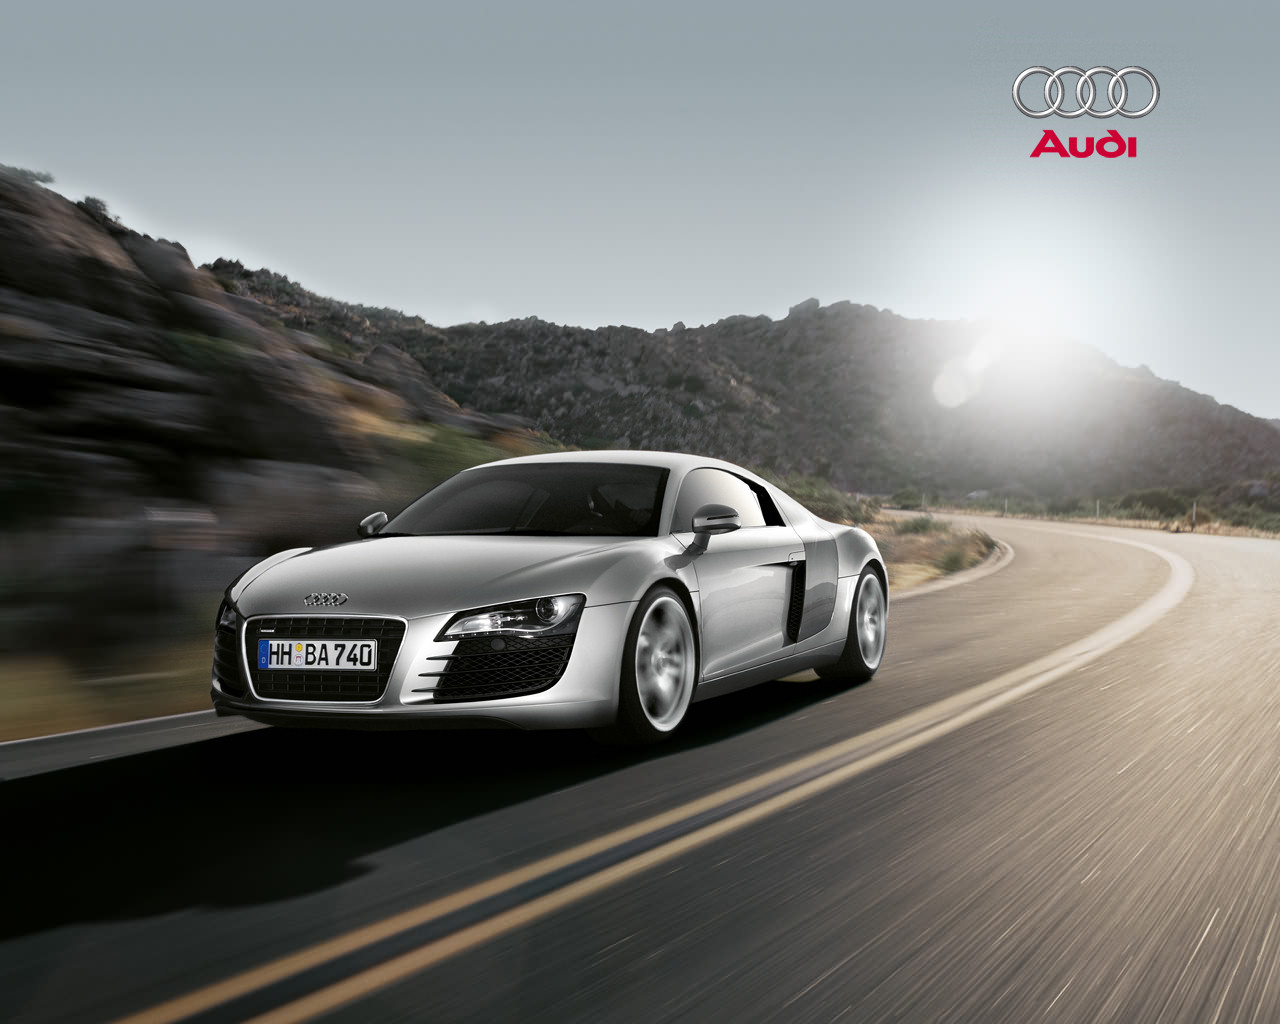 Audi R8 Wallpapers Free Download Wallpaper DaWallpaperz